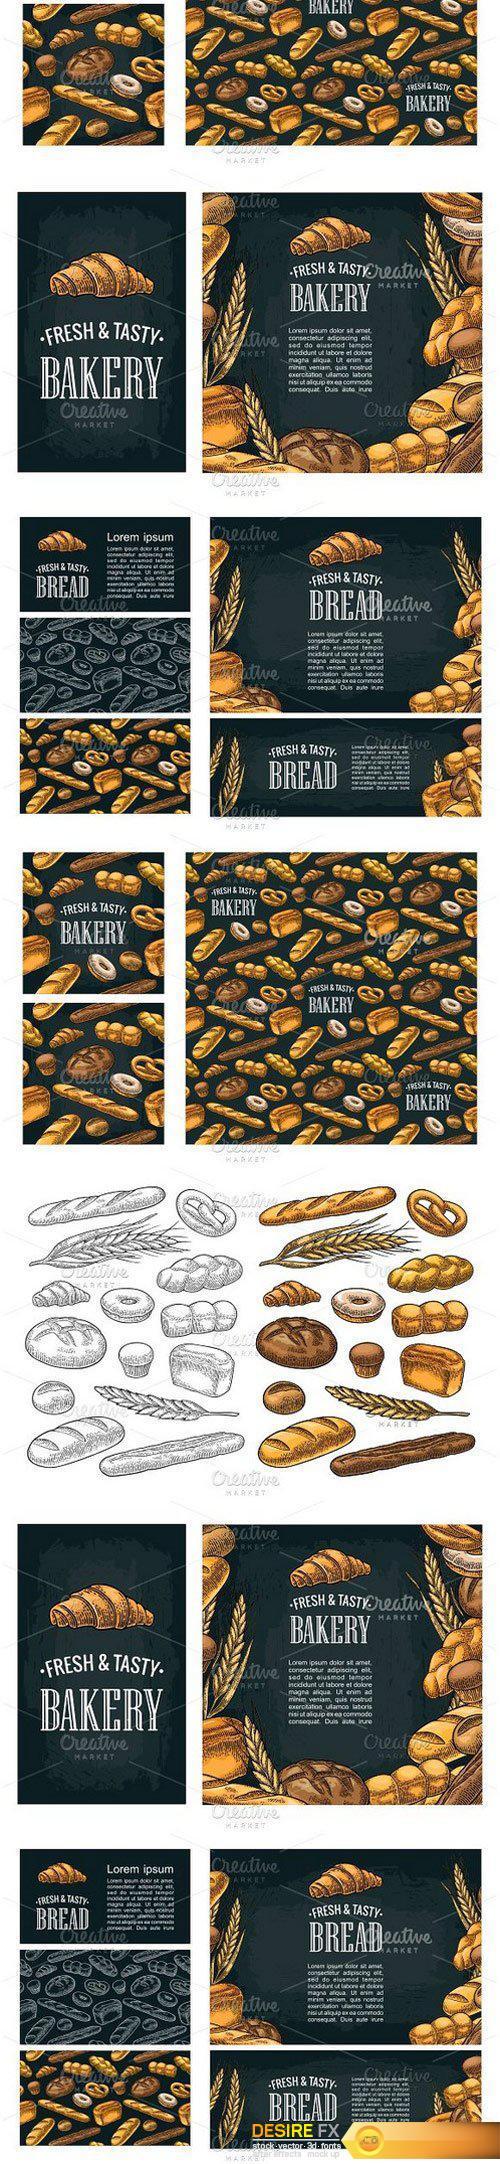 CM - Bundle of sets of bakery, bread 1270185